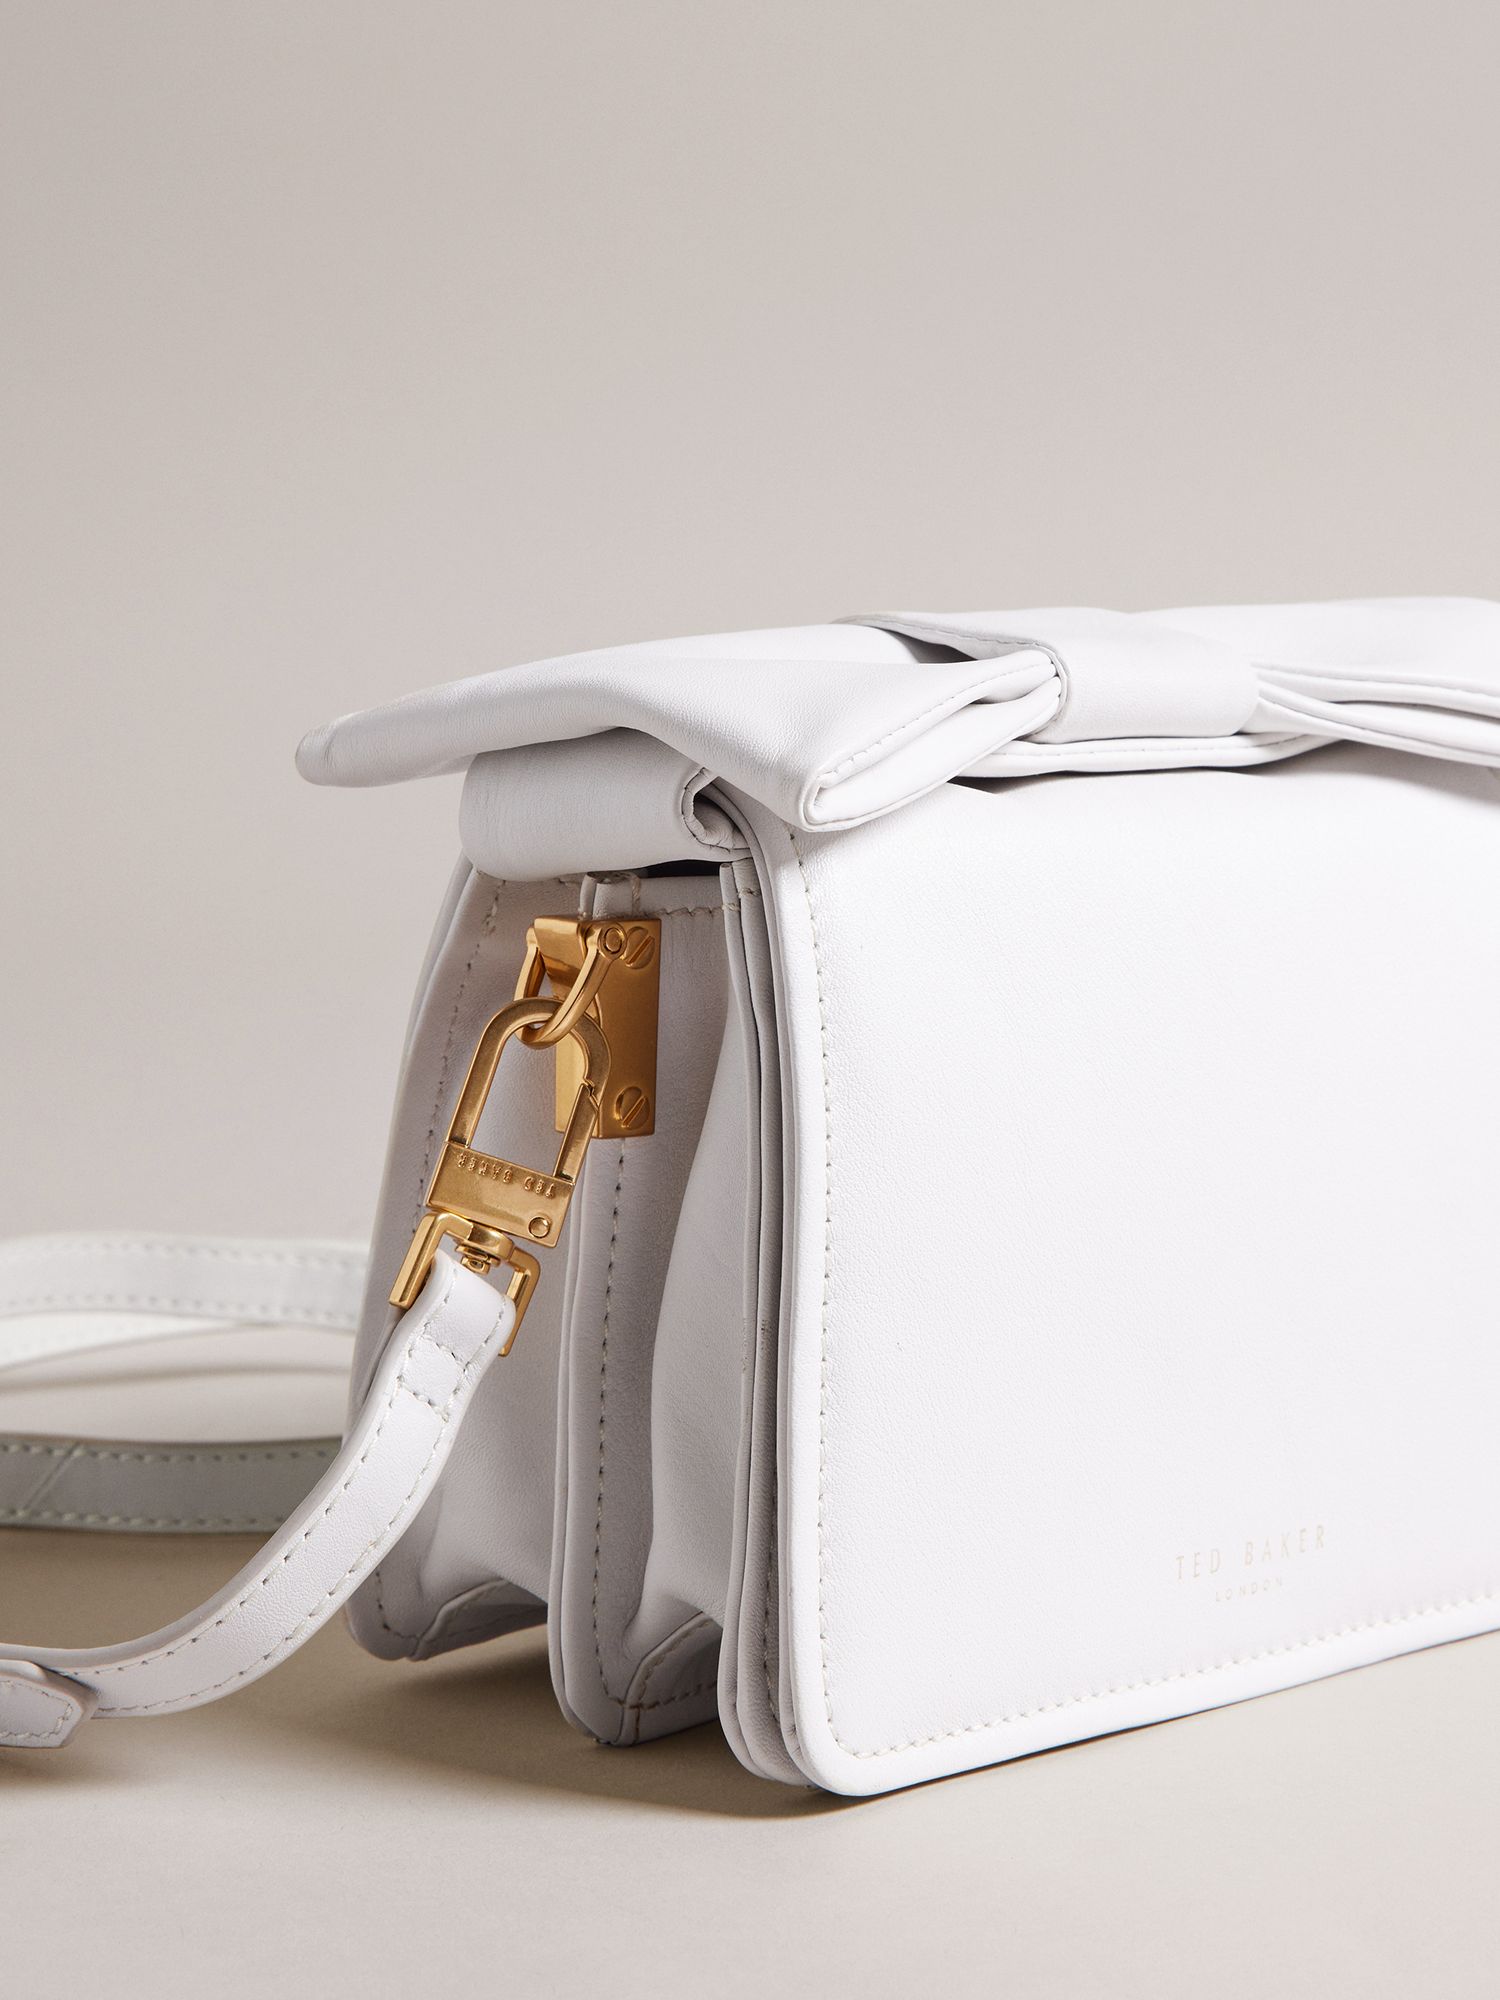 Ted Baker Bow Detail Mini Cross Body Bag, White, One Size